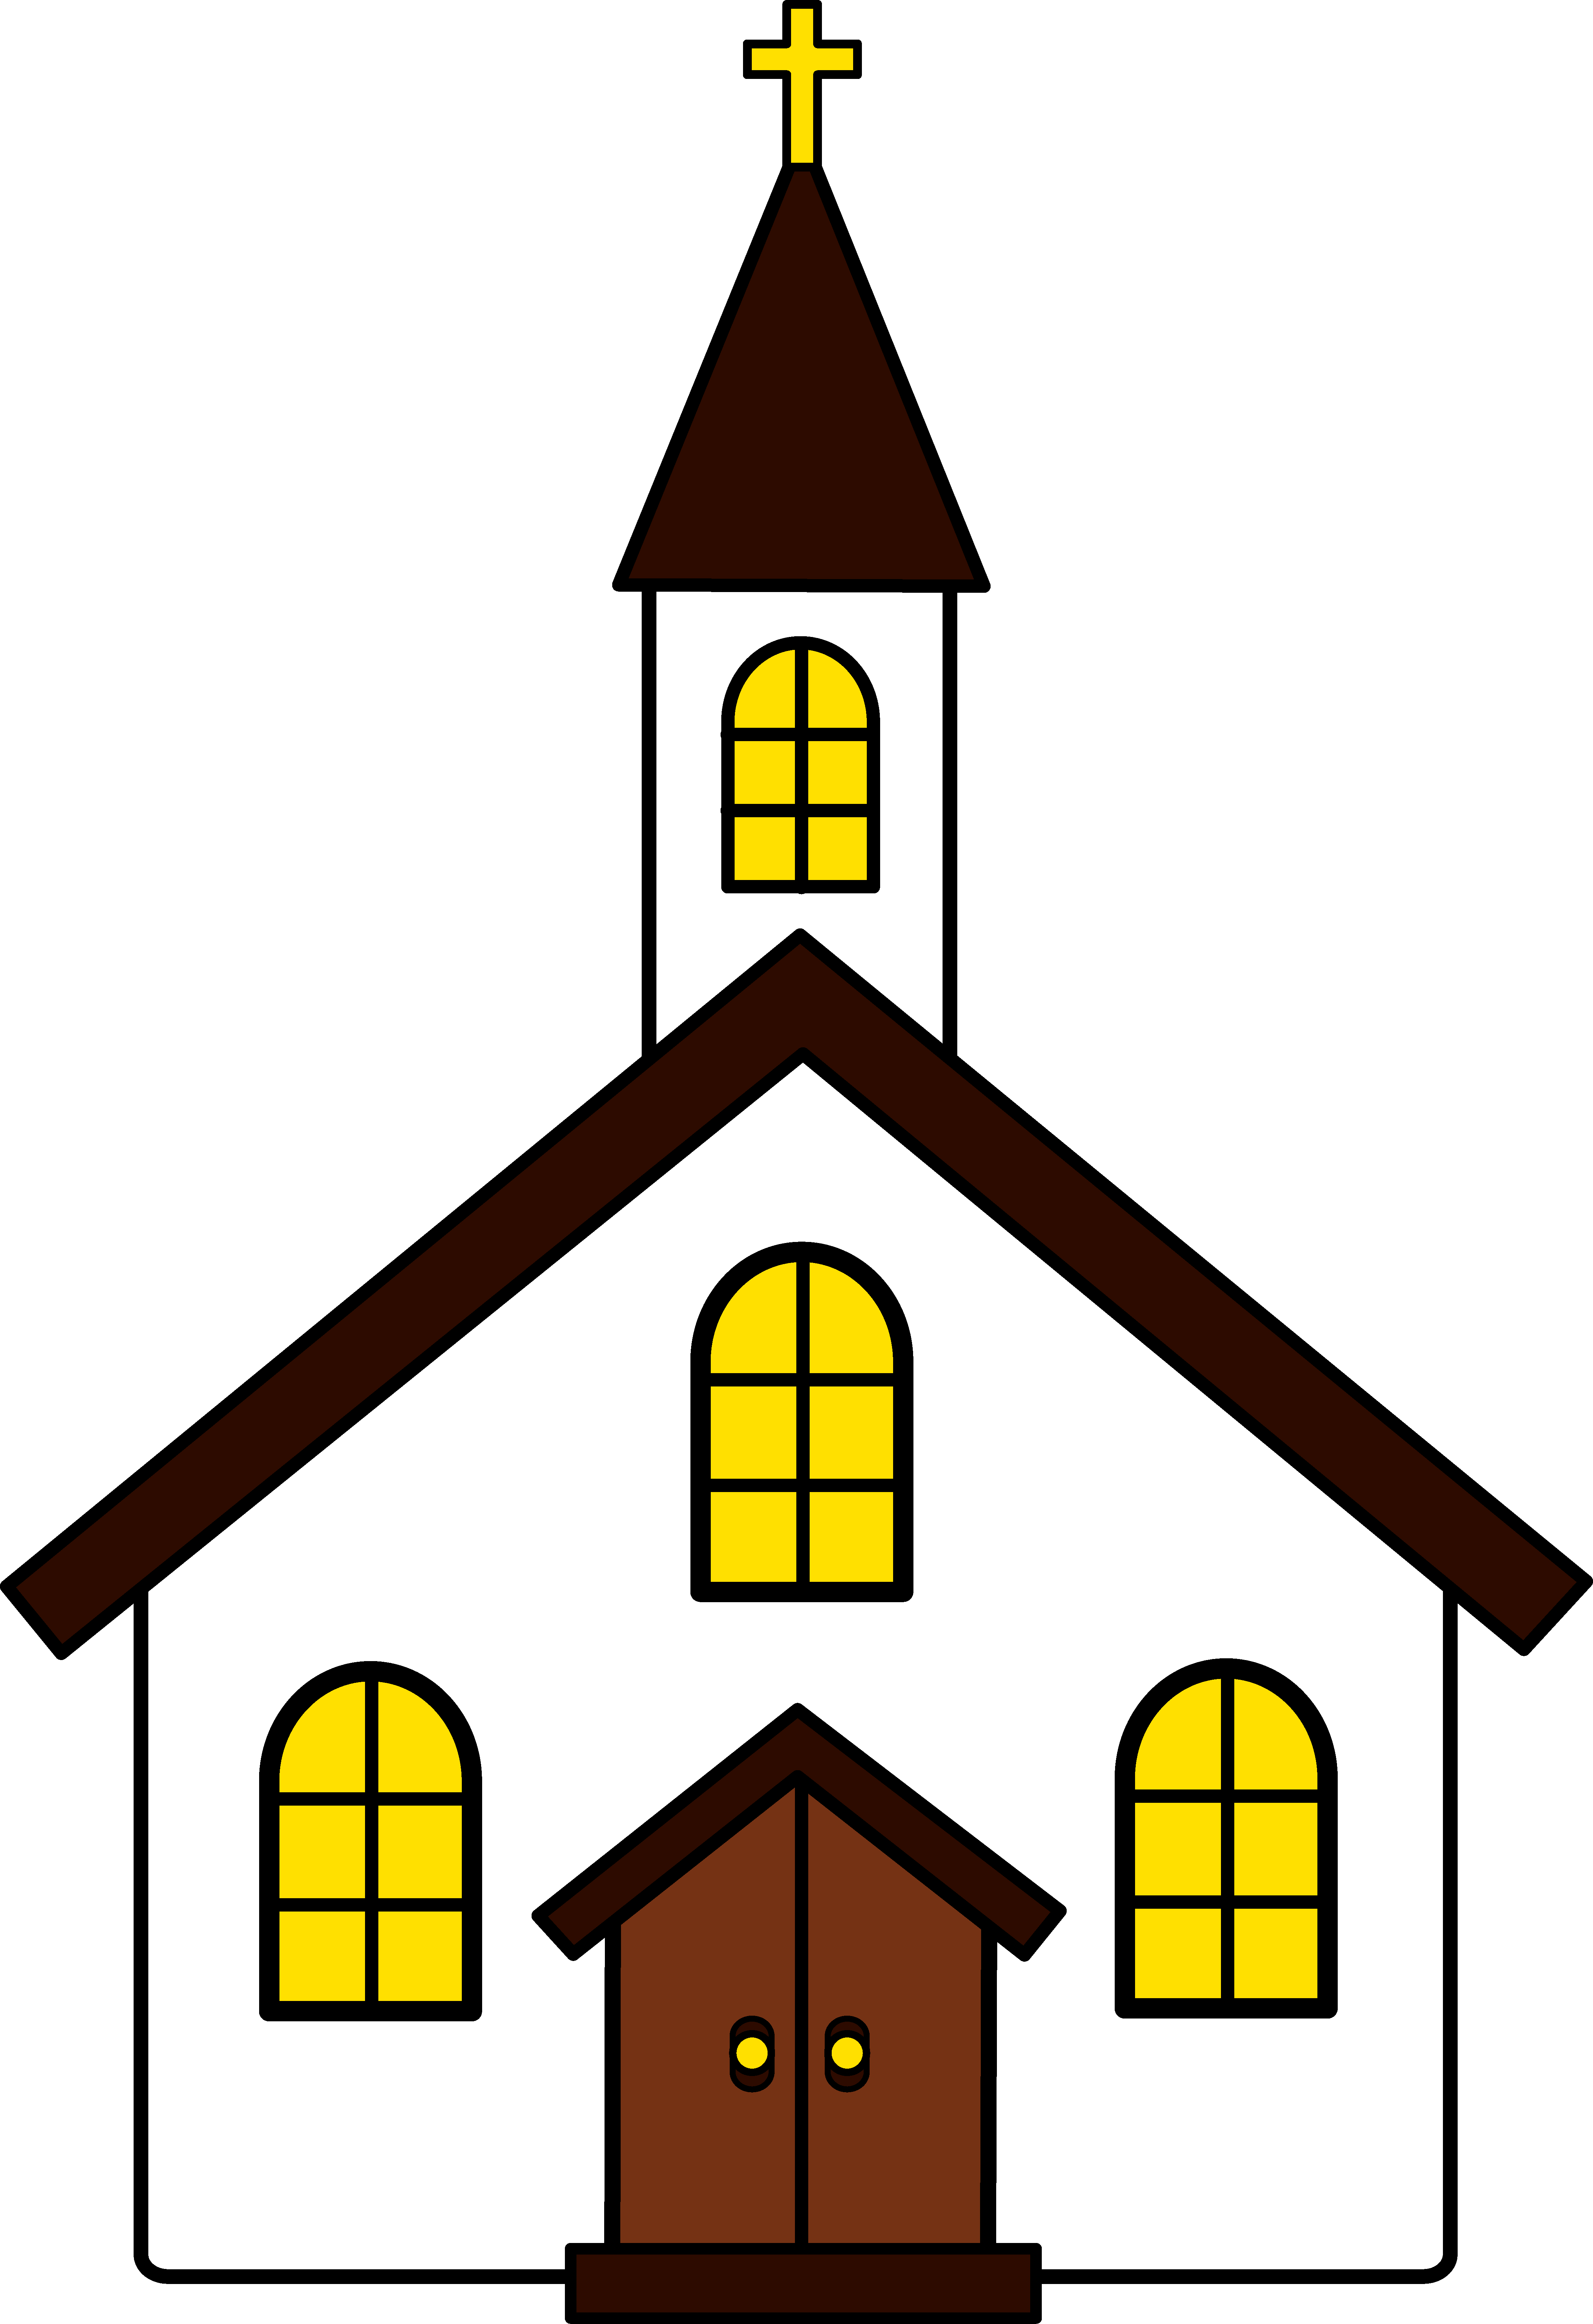 Small church house clipart